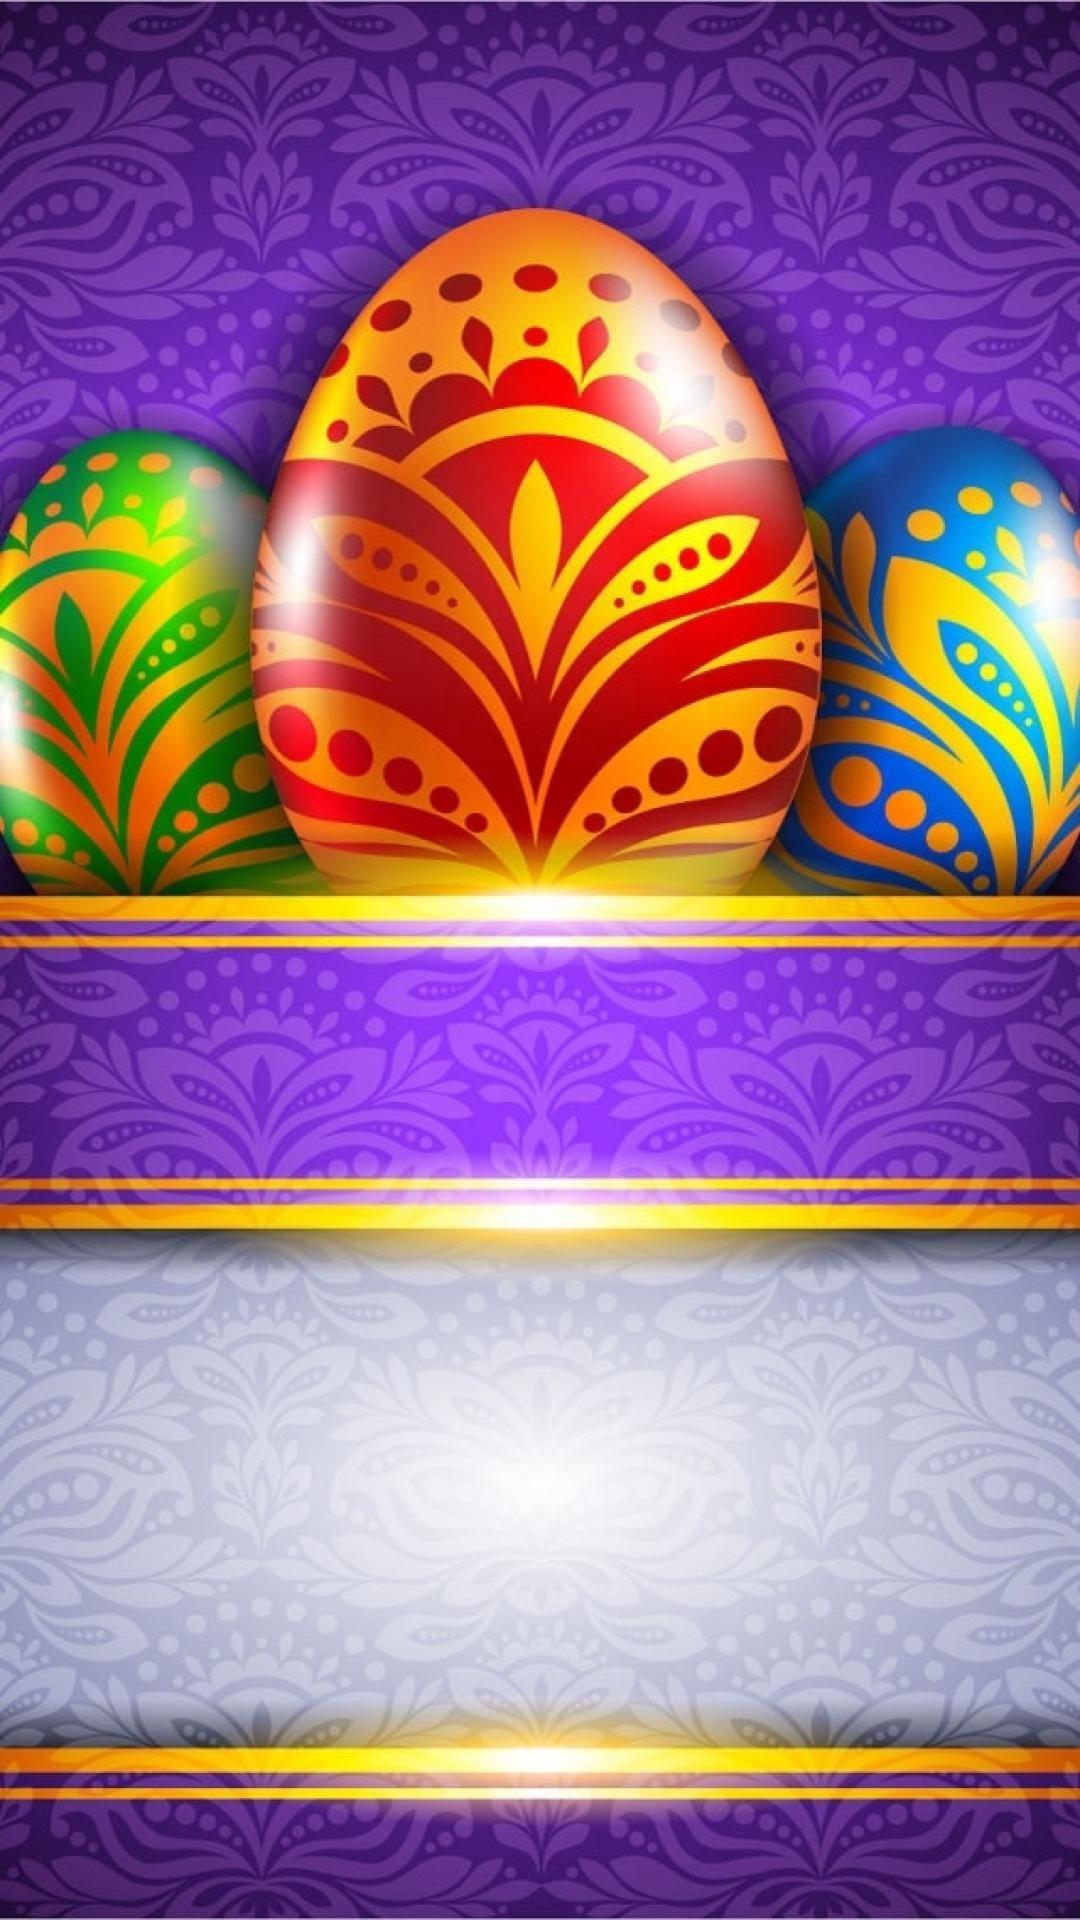 iphone 6 retina wallpaper. Easter Wallpaper!. Happy